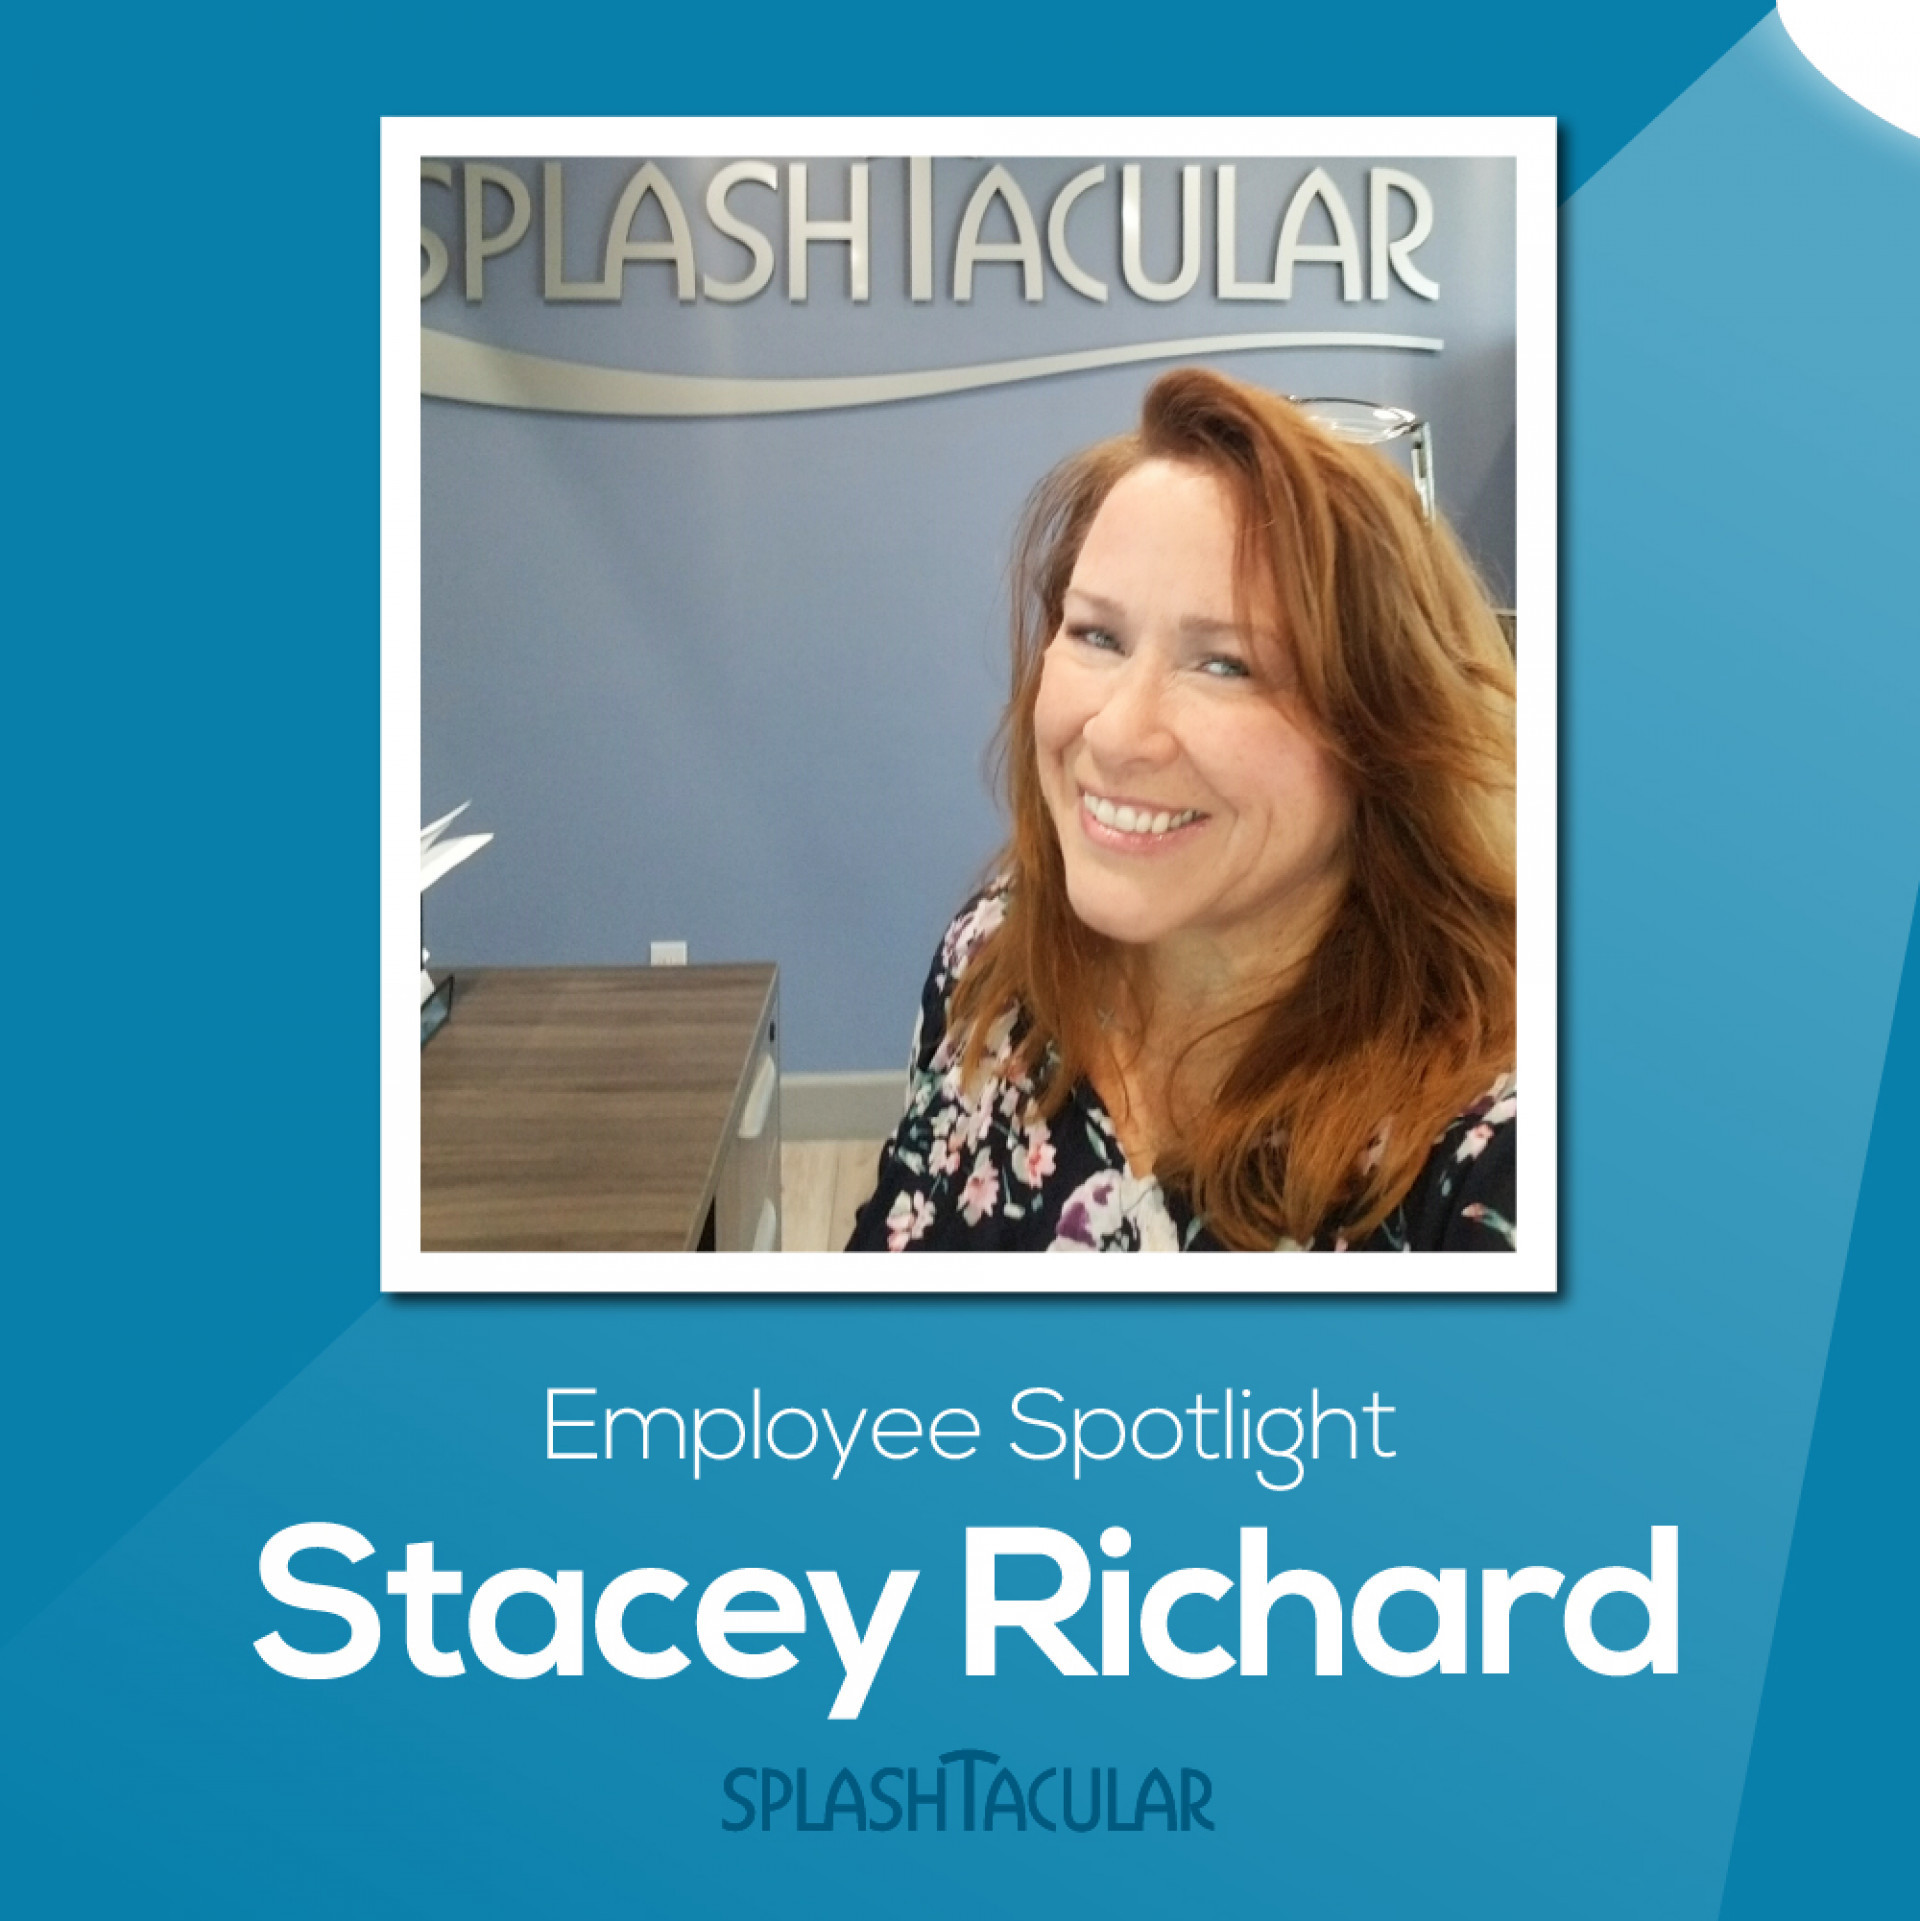 Employee Spotlight - Stacey Richard